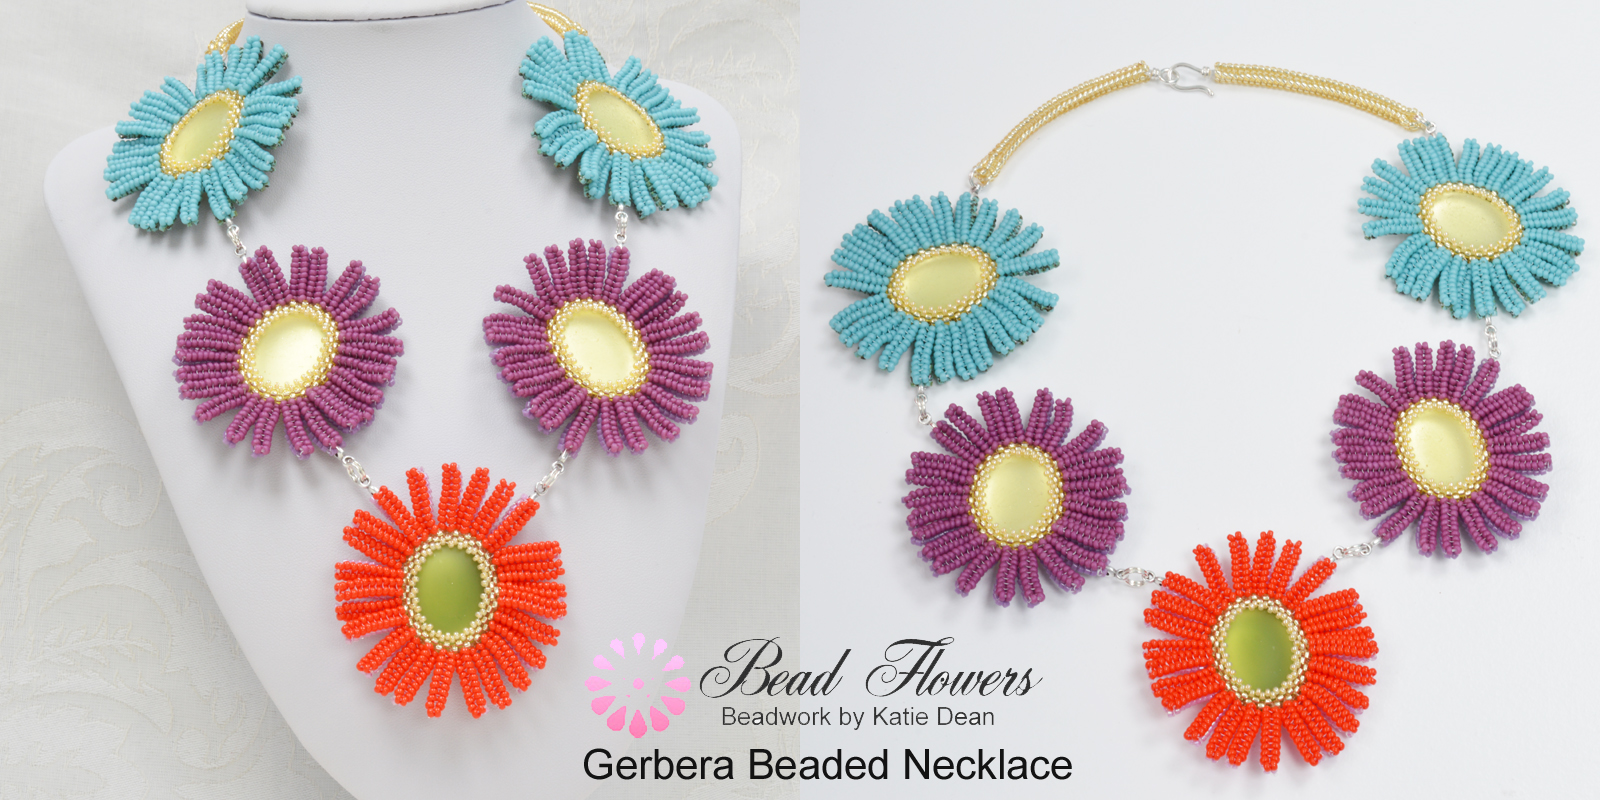 Gerbera Beaded Necklace Online Beading Classes, Katie Dean, My World of Beads